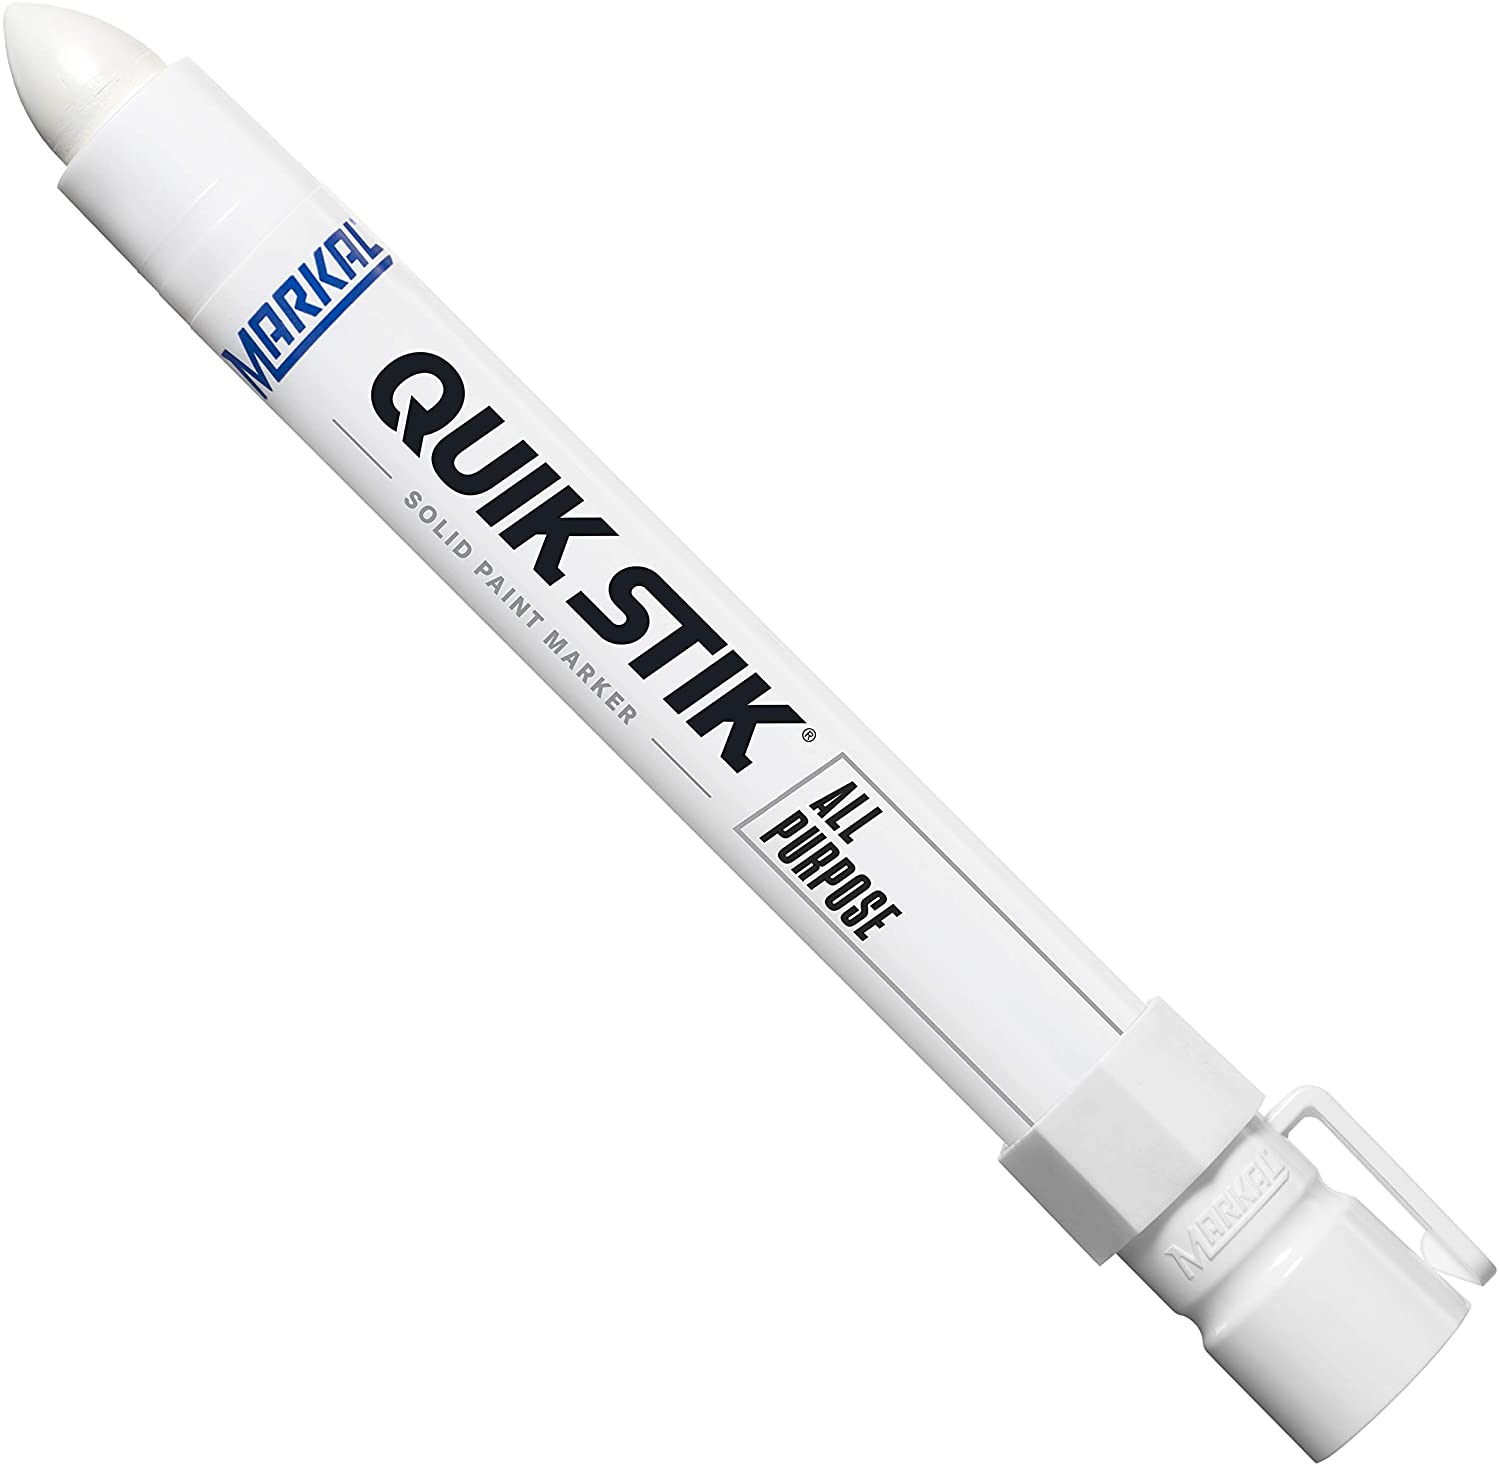 Markal White Quik Stik All Purpose Solid Paint Marker (61051)